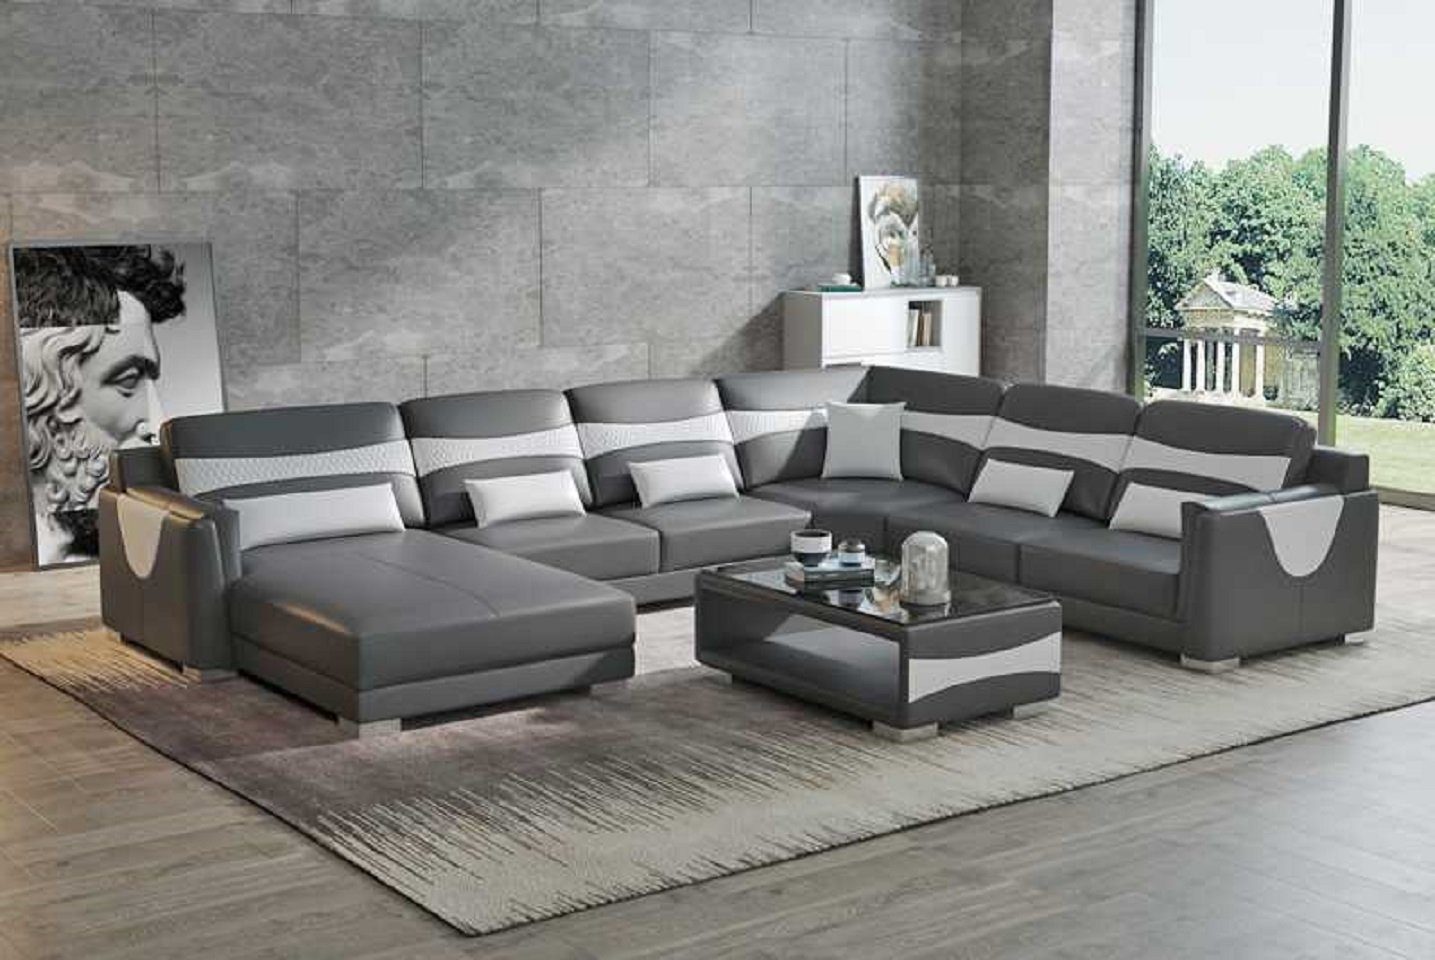 JVmoebel Ecksofa Luxus Wohnlandschaft Sofa U Form Groß Ecksofa Kunstleder Neu, 4 Teile, Made in Europe Grau